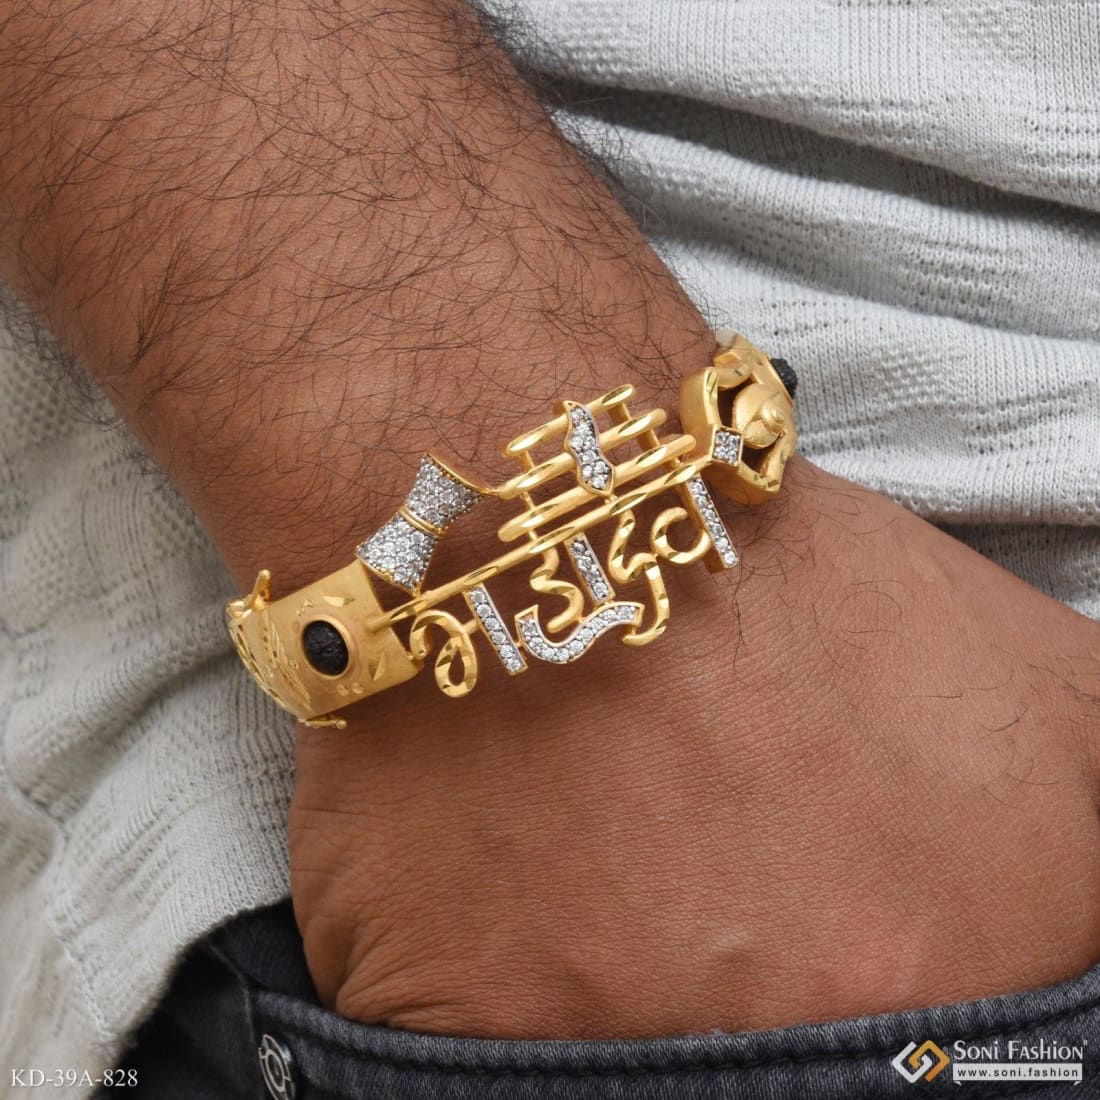 1 Gram Gold Forming Mahadev with Diamond Glamorous Design Kada for Men -  Style A828 – Soni Fashion®